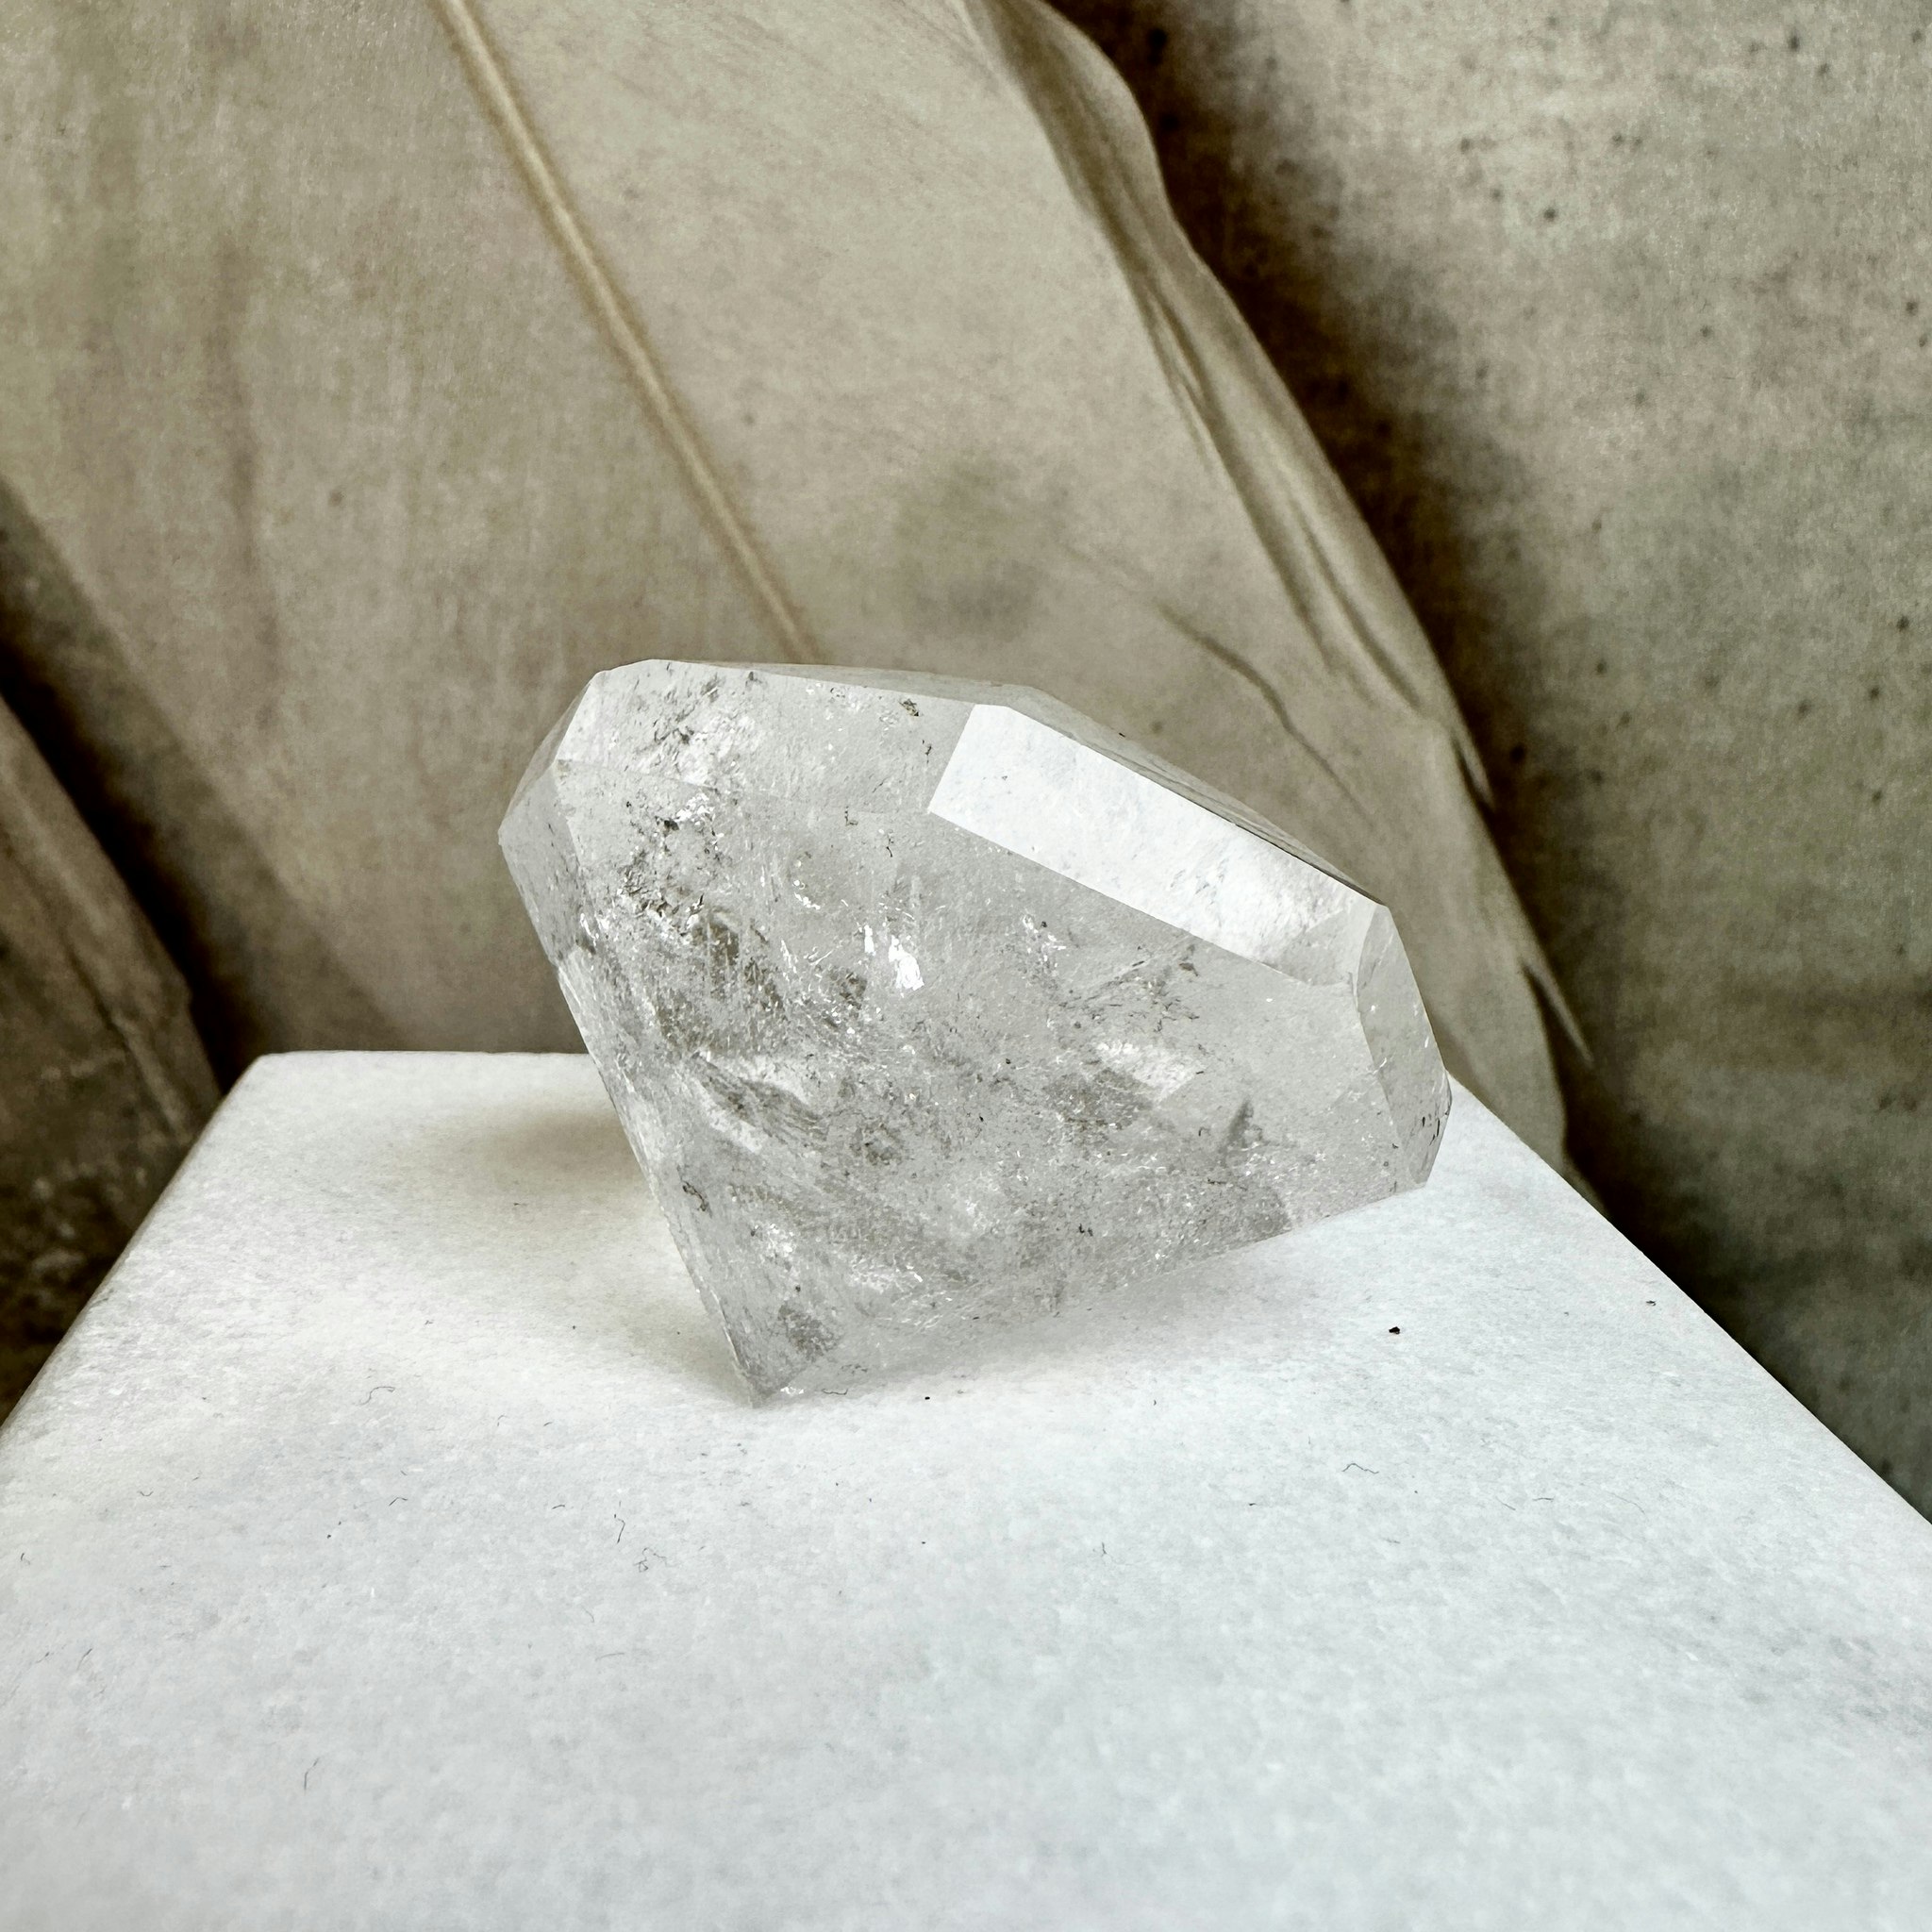 Bergkristall, diamant lite naggad på ena sidan